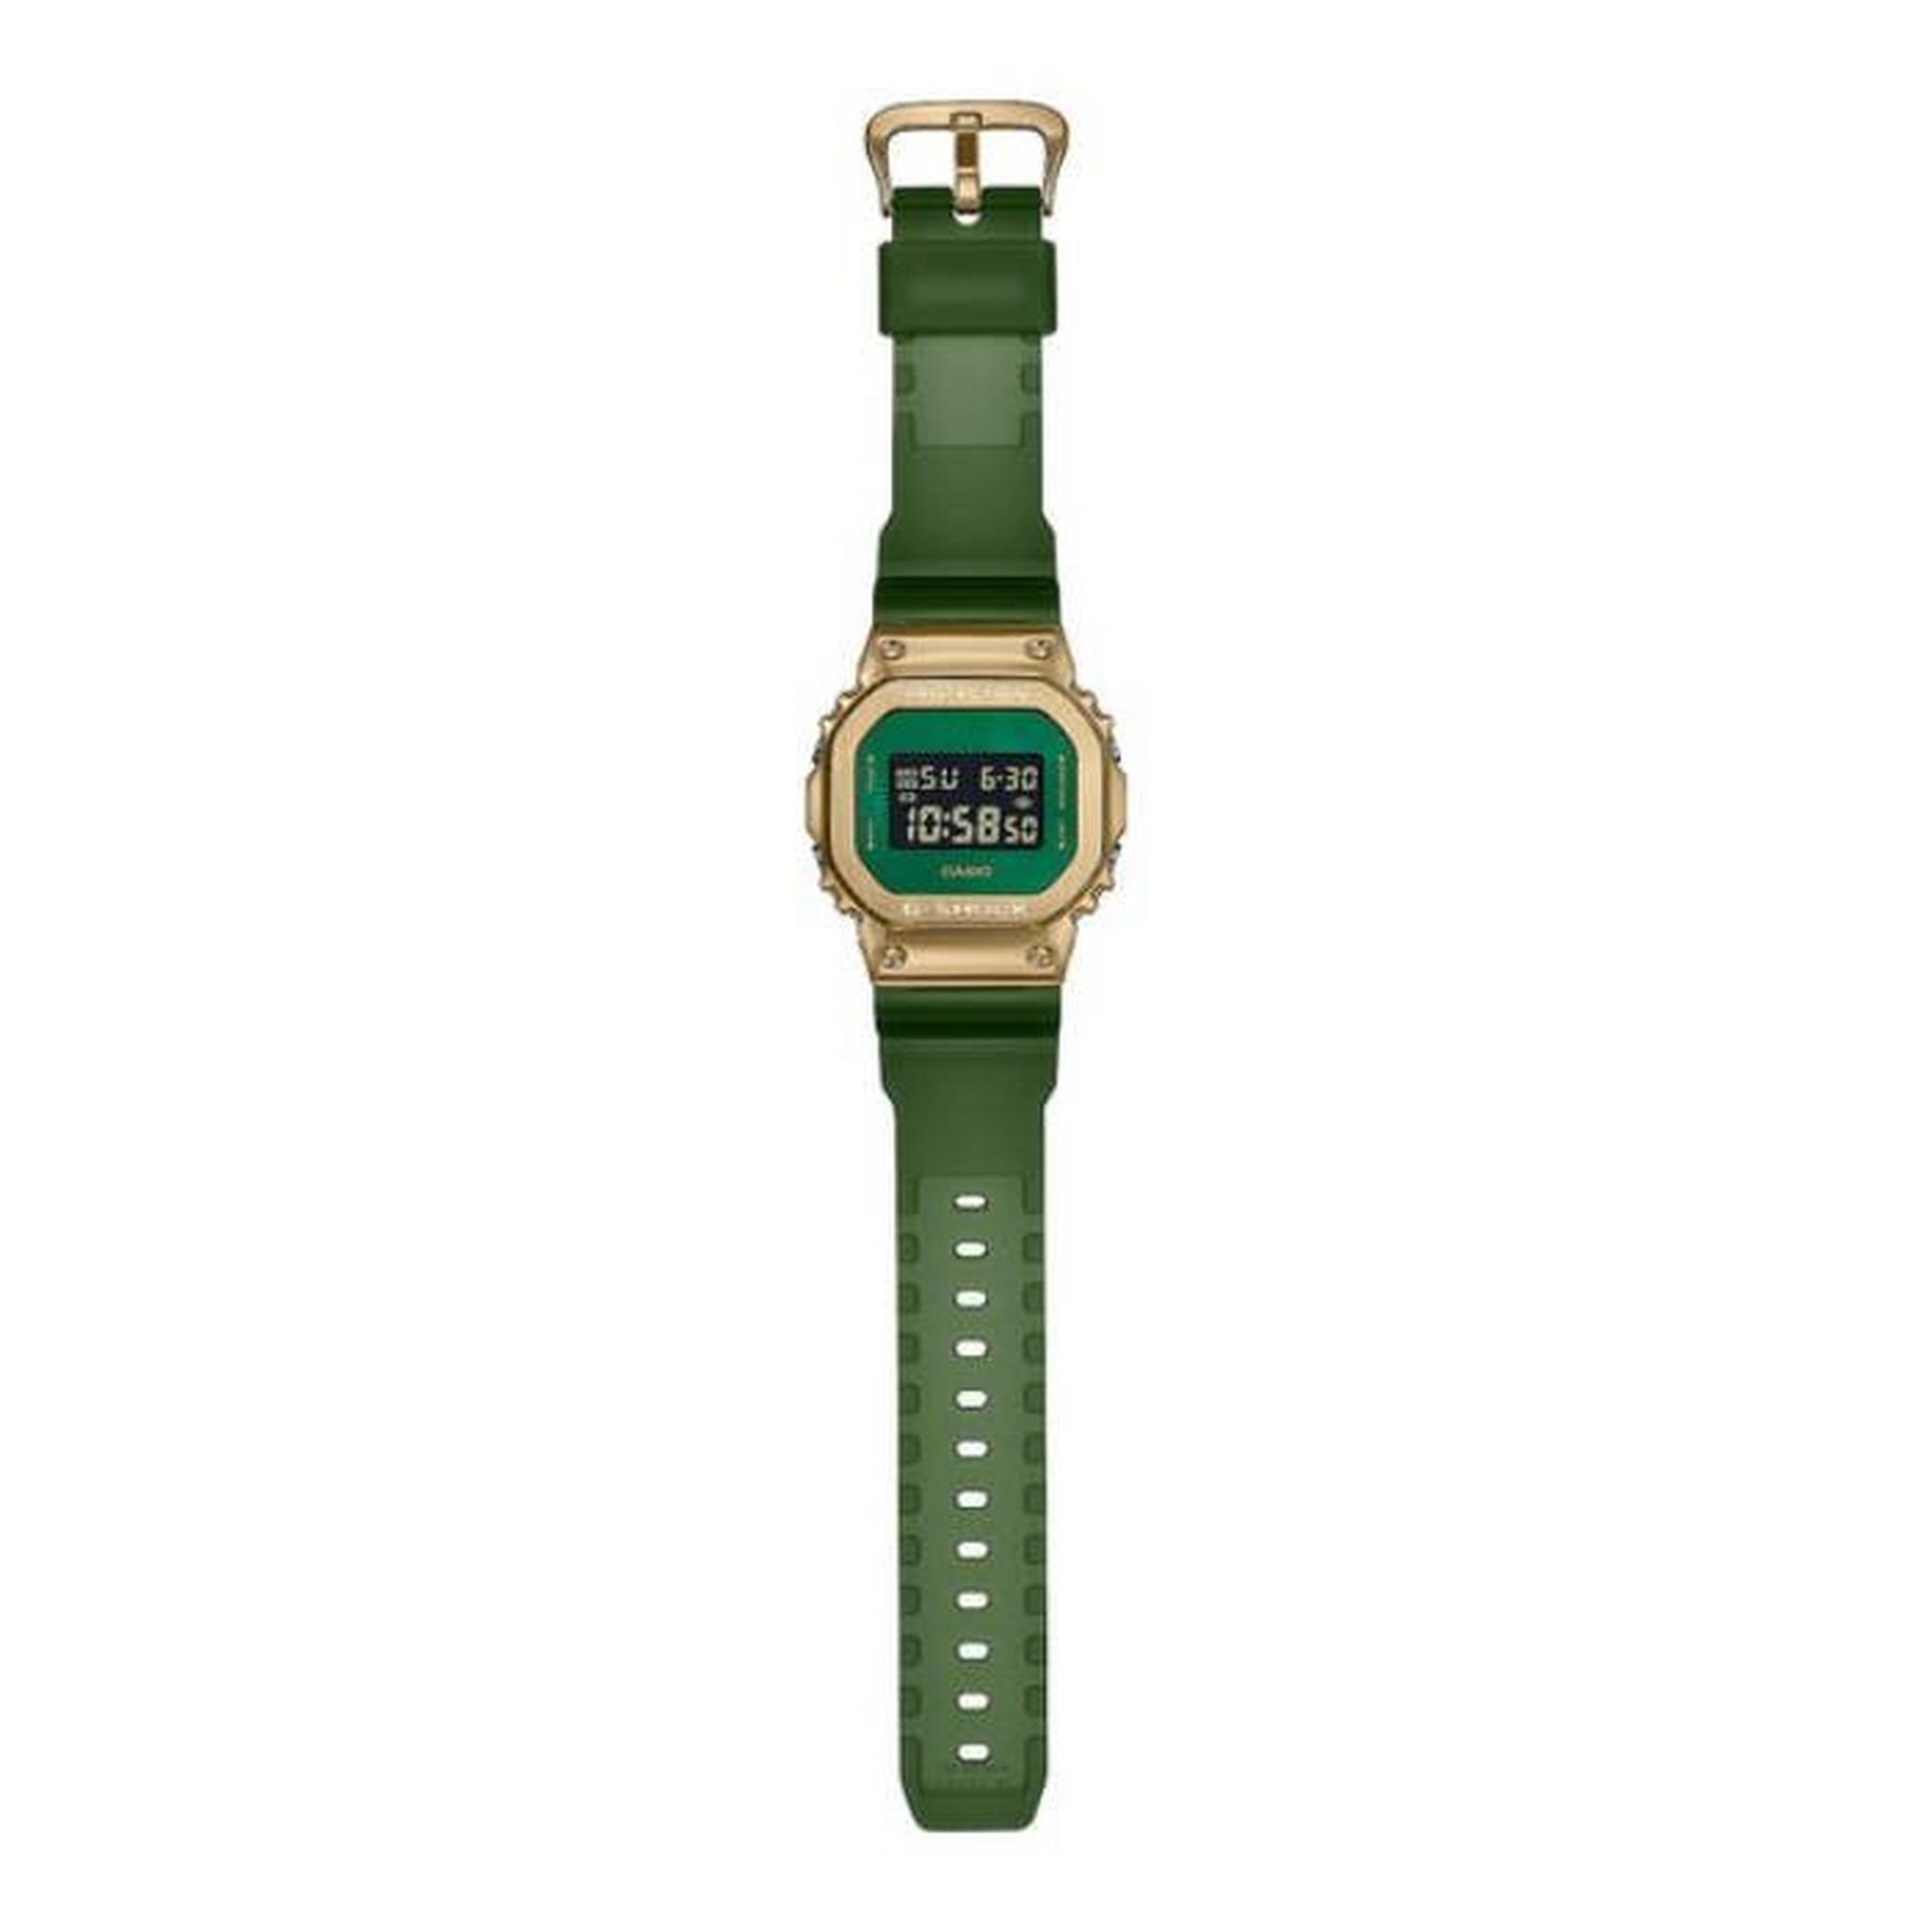 Casio G-shock Youth Watch Unisex, Digital, 49 MM, GM-5600CL-3DR – Green